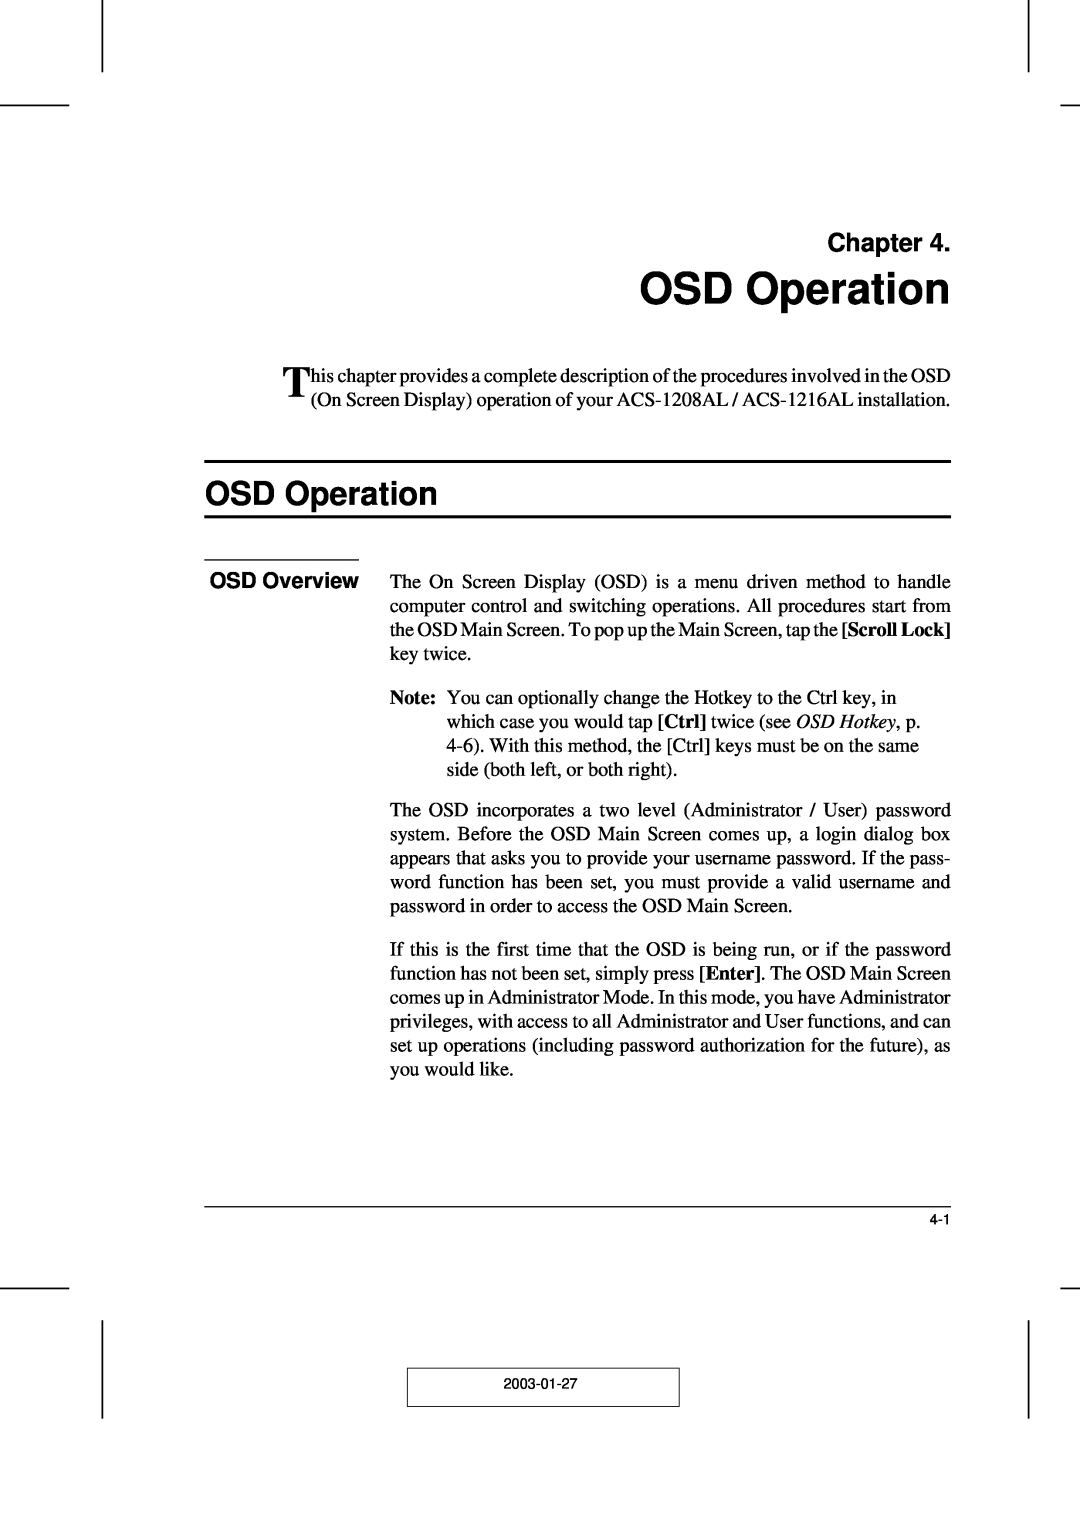 ATEN Technology ACS-1208AL, ACS-1216AL user manual OSD Operation, Chapter 